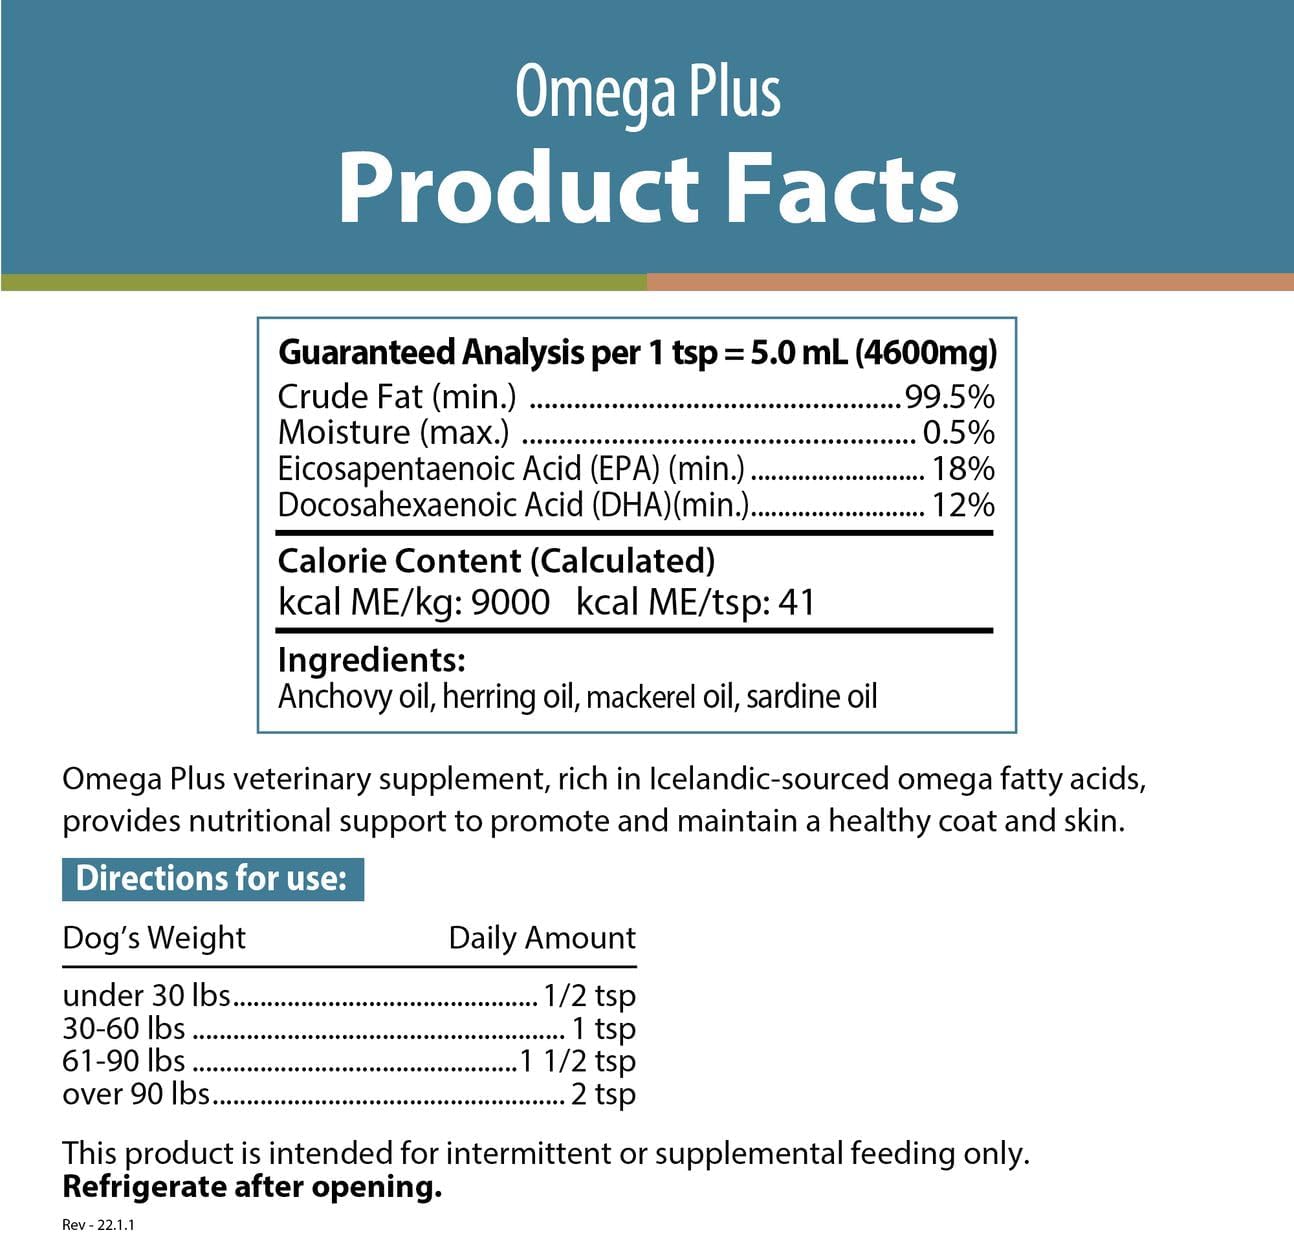 JustFoodForDogs Omega Plus Premium Fish Oil for Dogs Omega 3 Supplement, Liquid, 16 oz : Pet Supplies